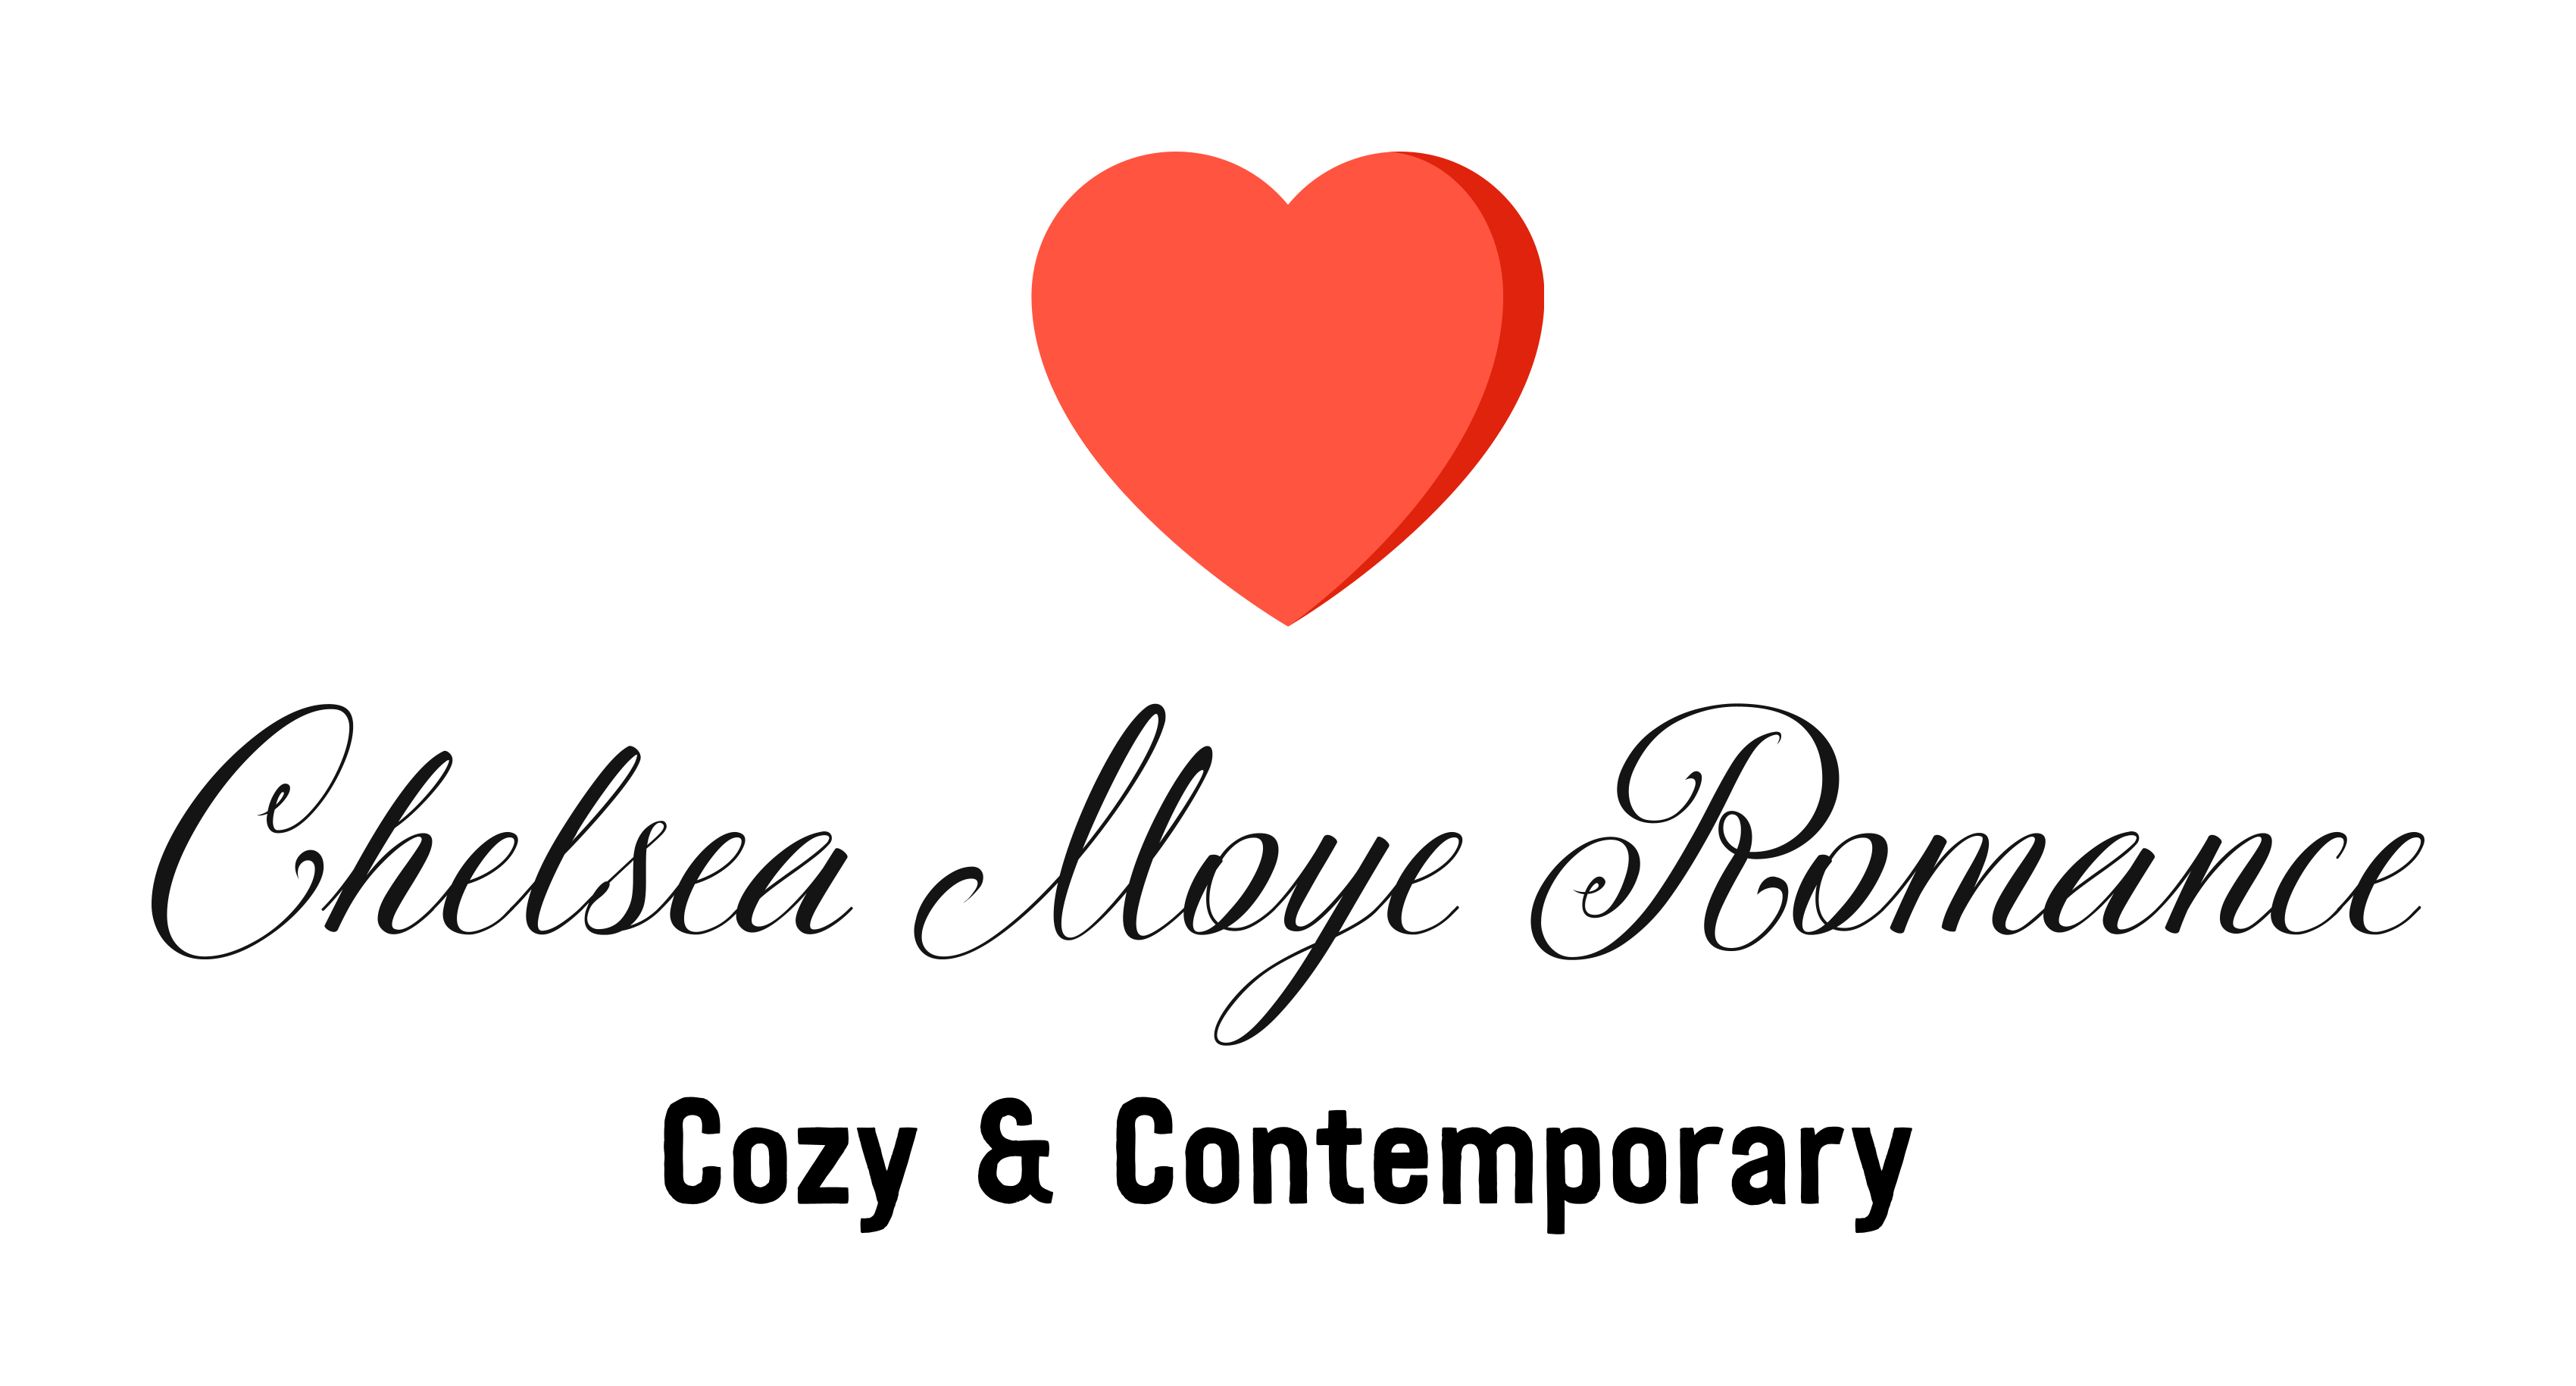 Chelsea Moye Romance